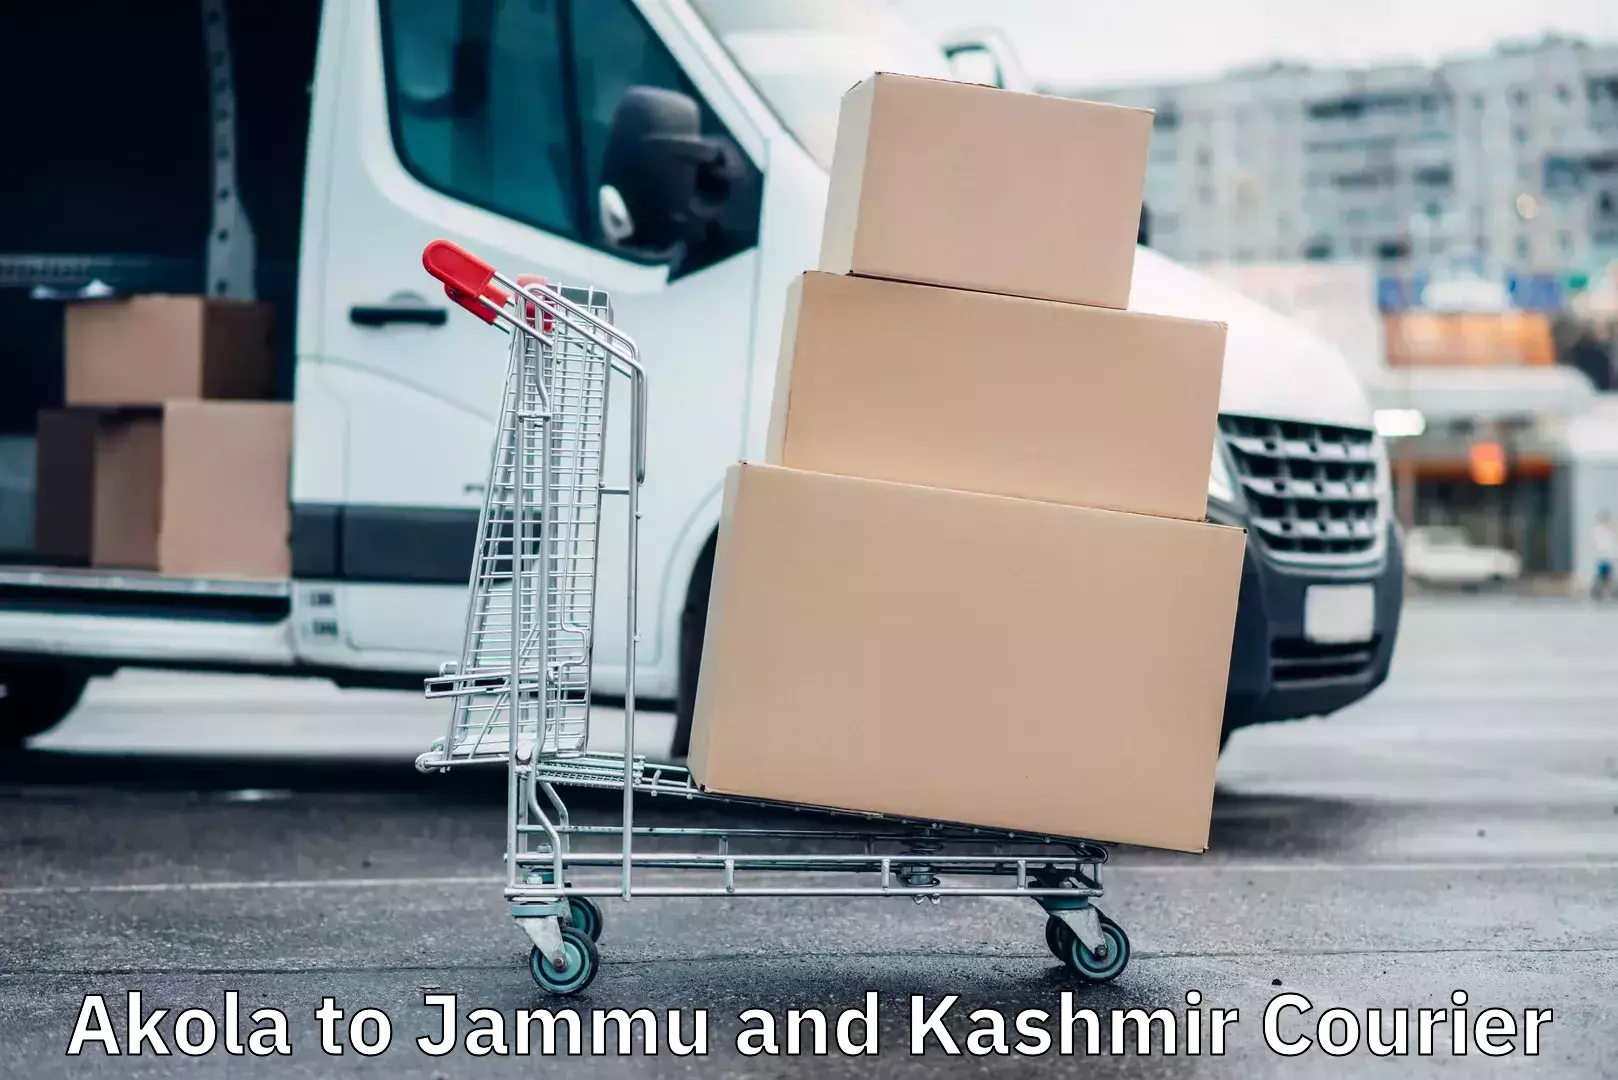 Advanced shipping technology Akola to Jammu and Kashmir